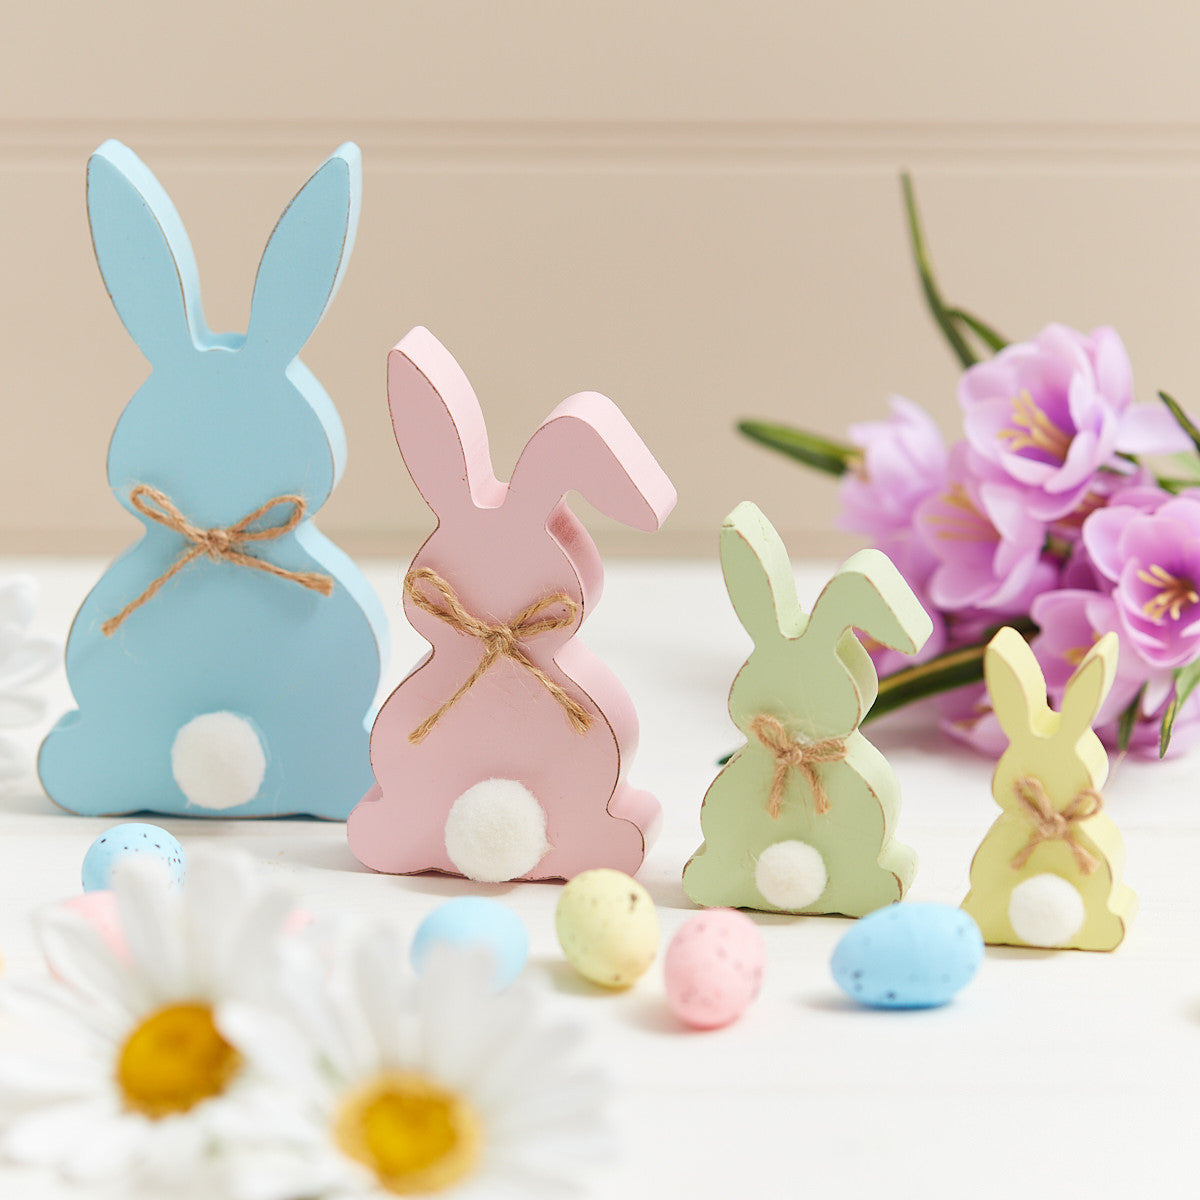 Wooden Pastel Bunny Ornaments - Set of 4